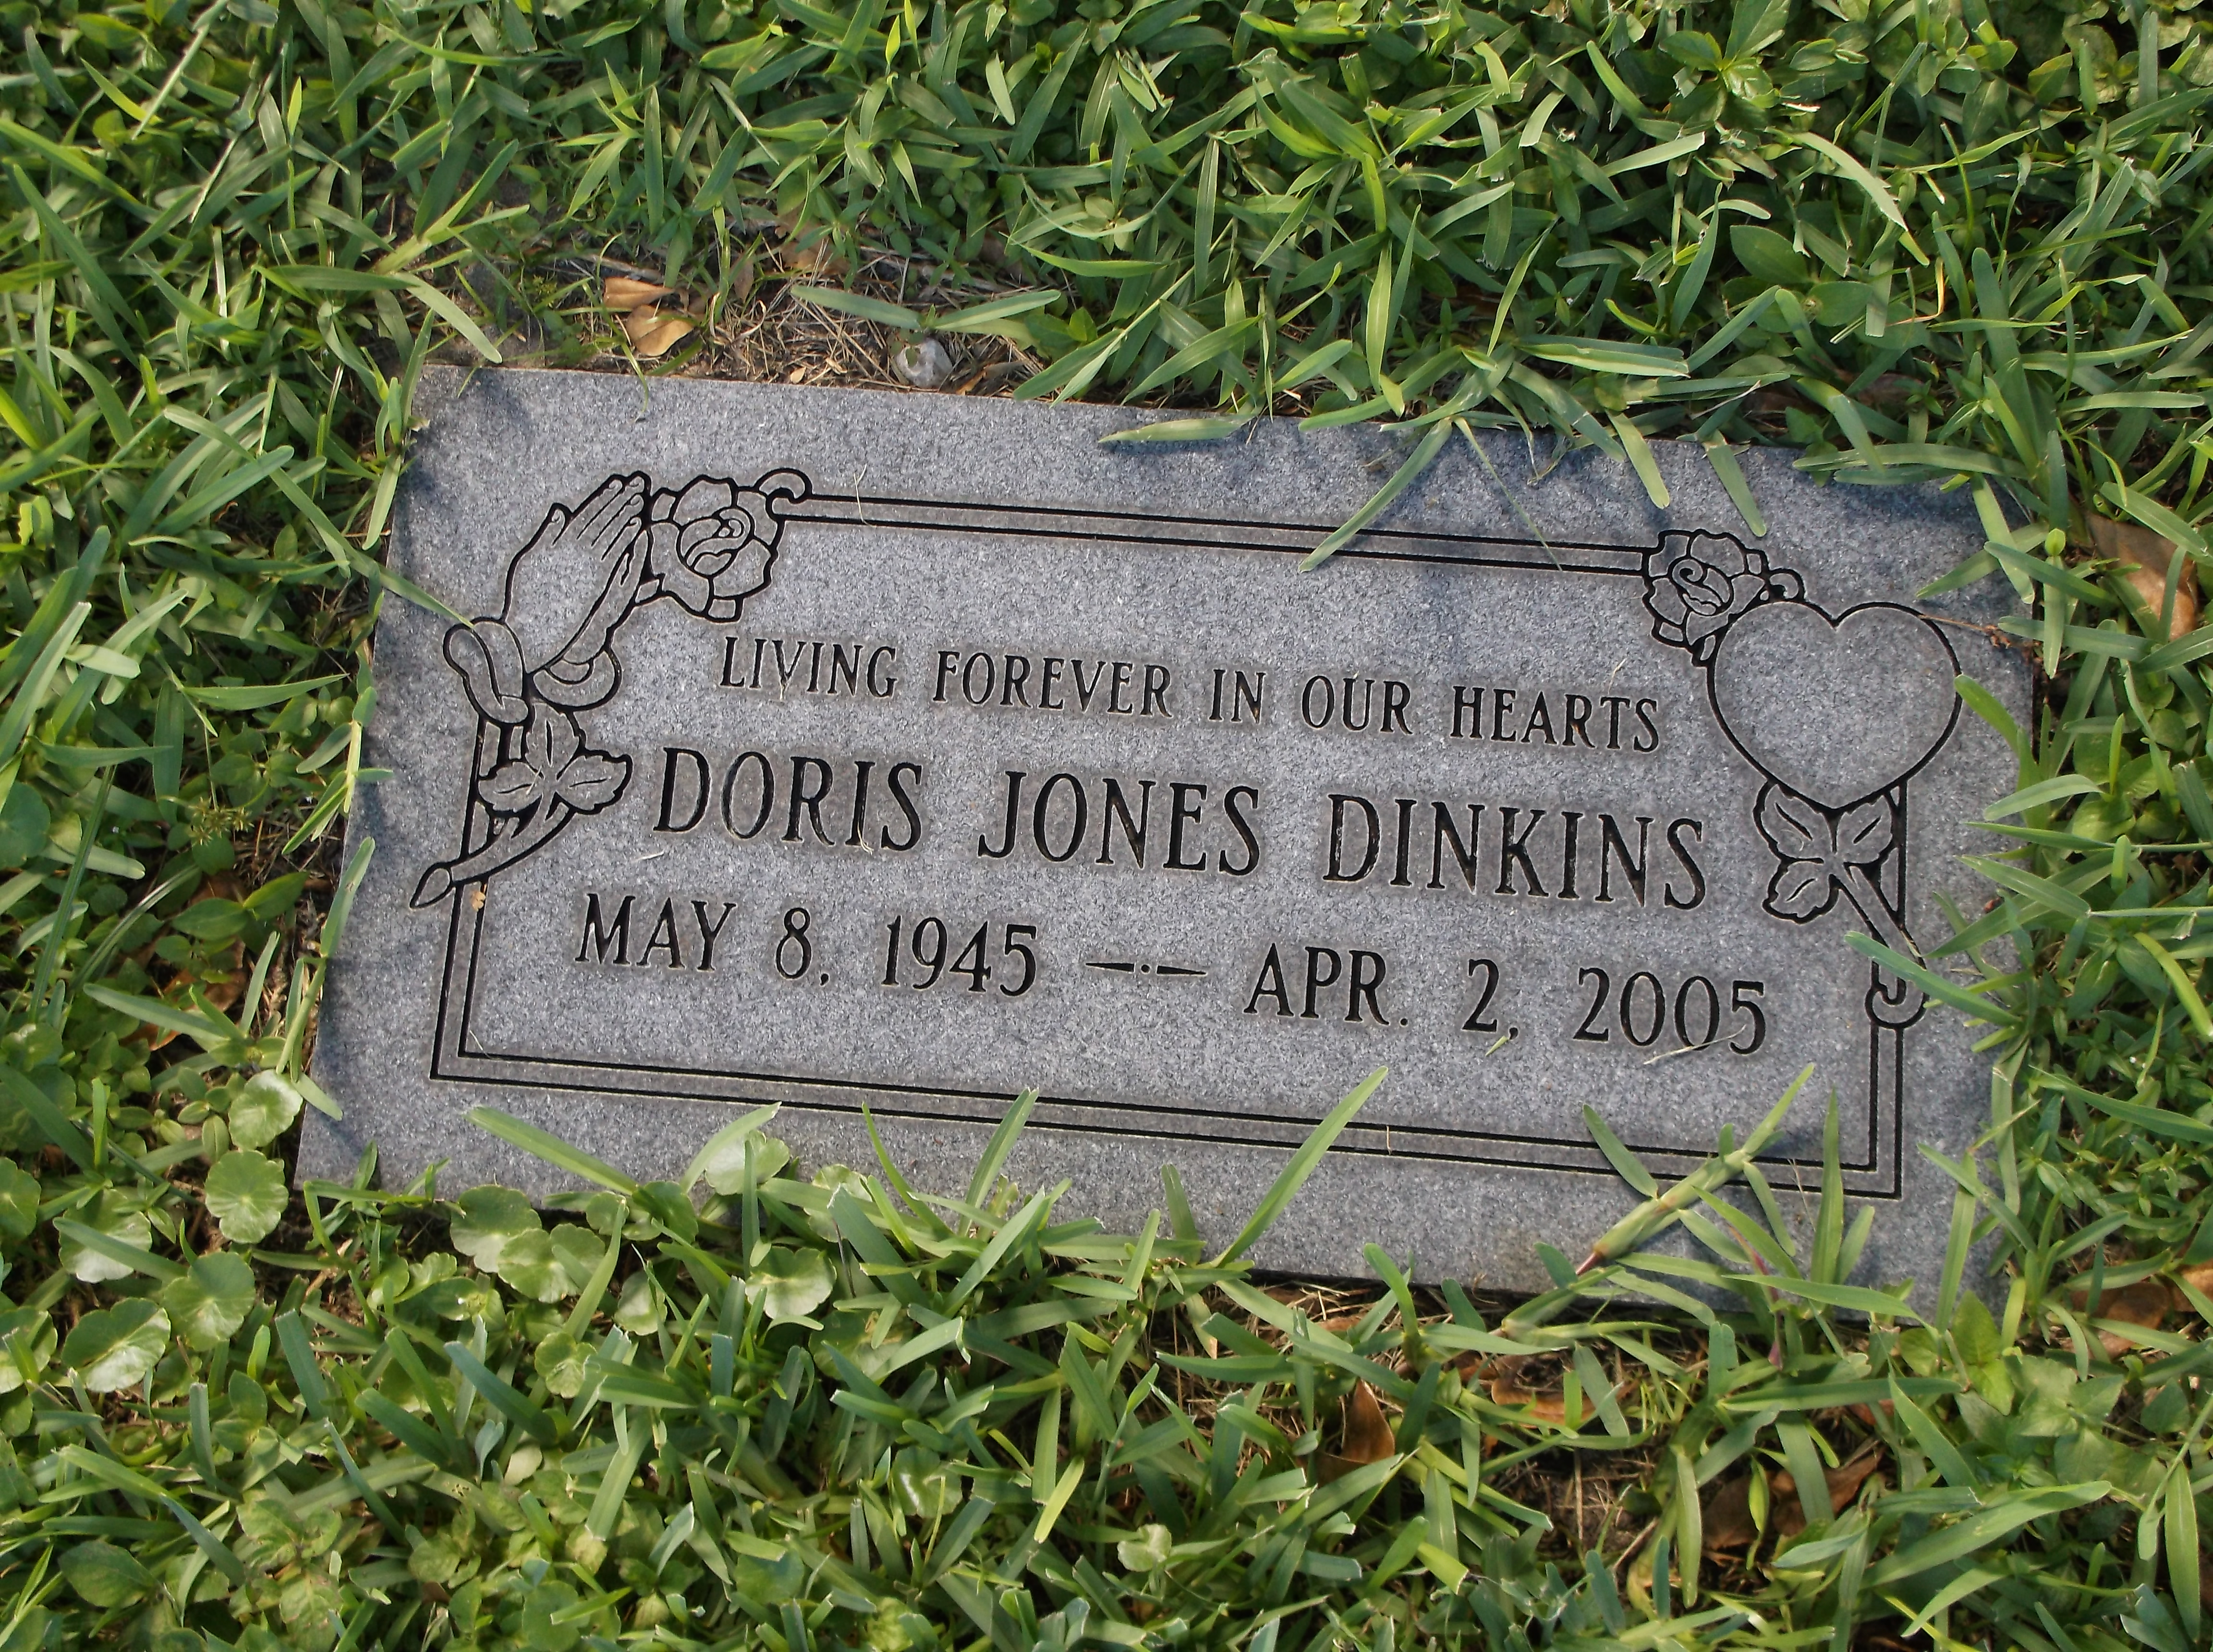 Doris Jones Dinkins